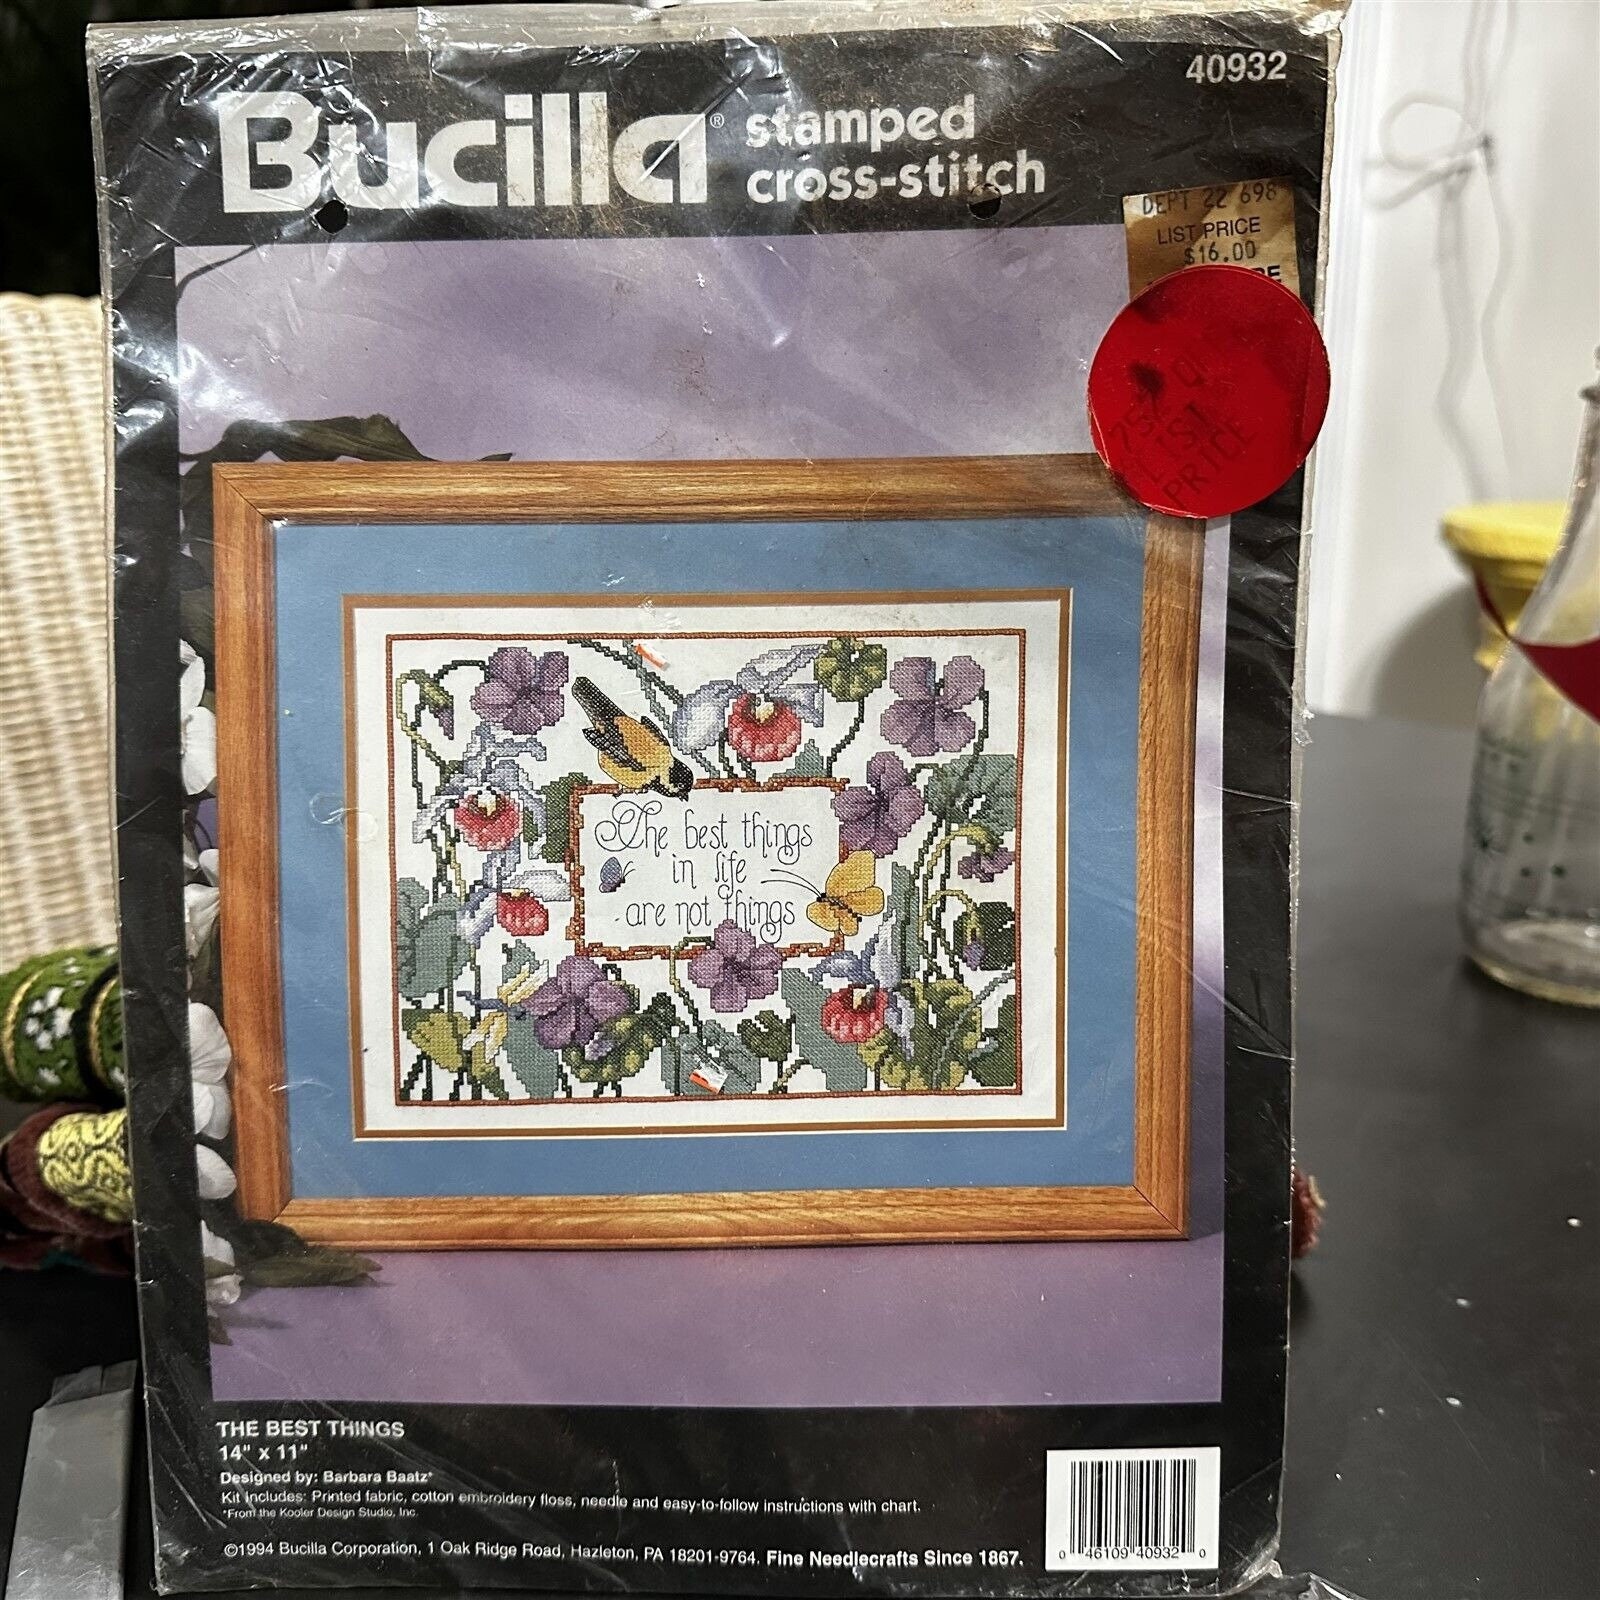 Bucilla GARDEN SANTA Felt Christmas Stocking Kit OOP Poinsettia RARE  Original